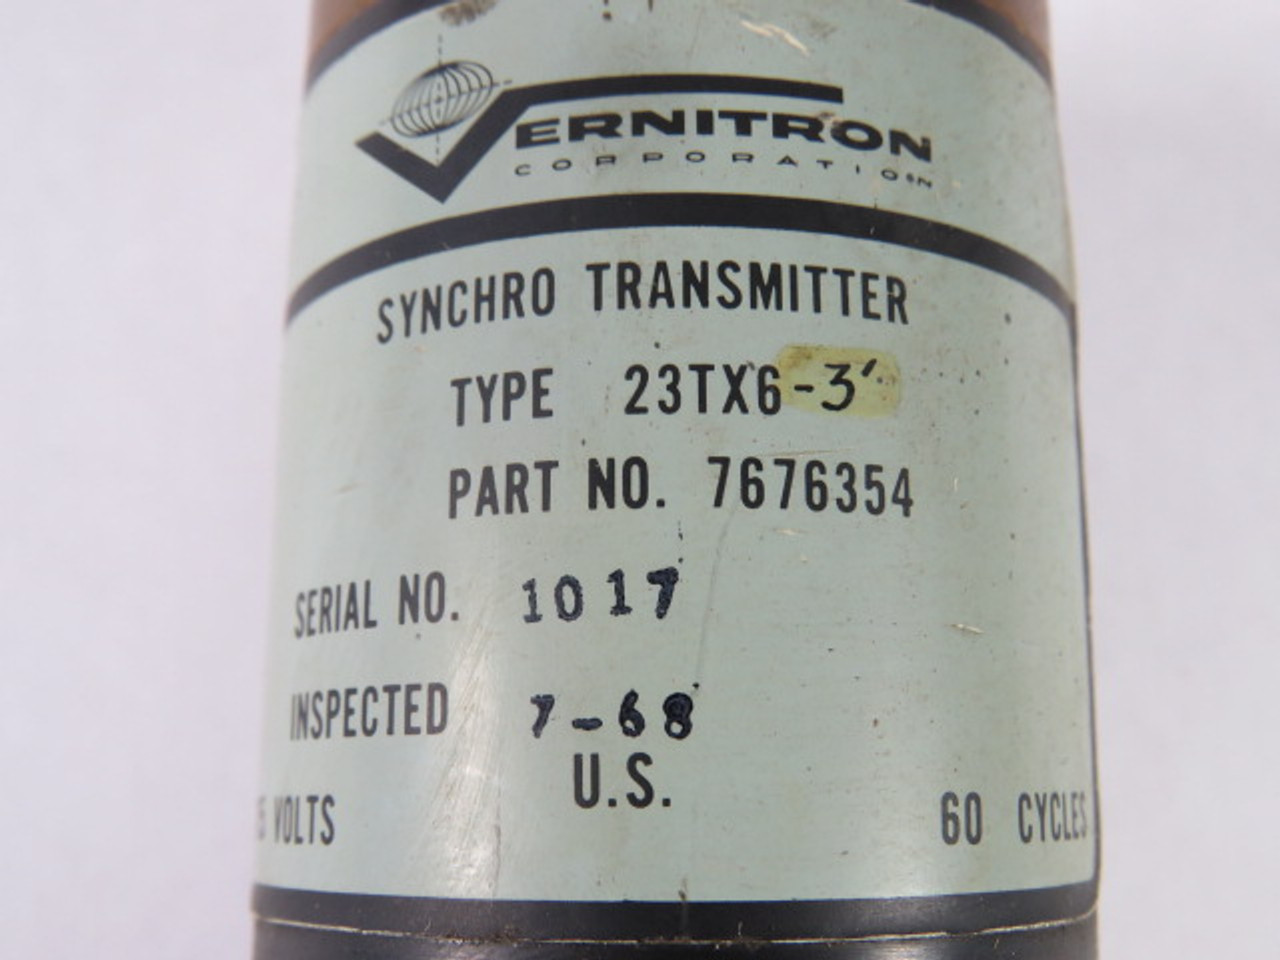 Vernitron 7676354 Synchro Transmitter 3A Single Shaft 2.2490" Flange Dia USED